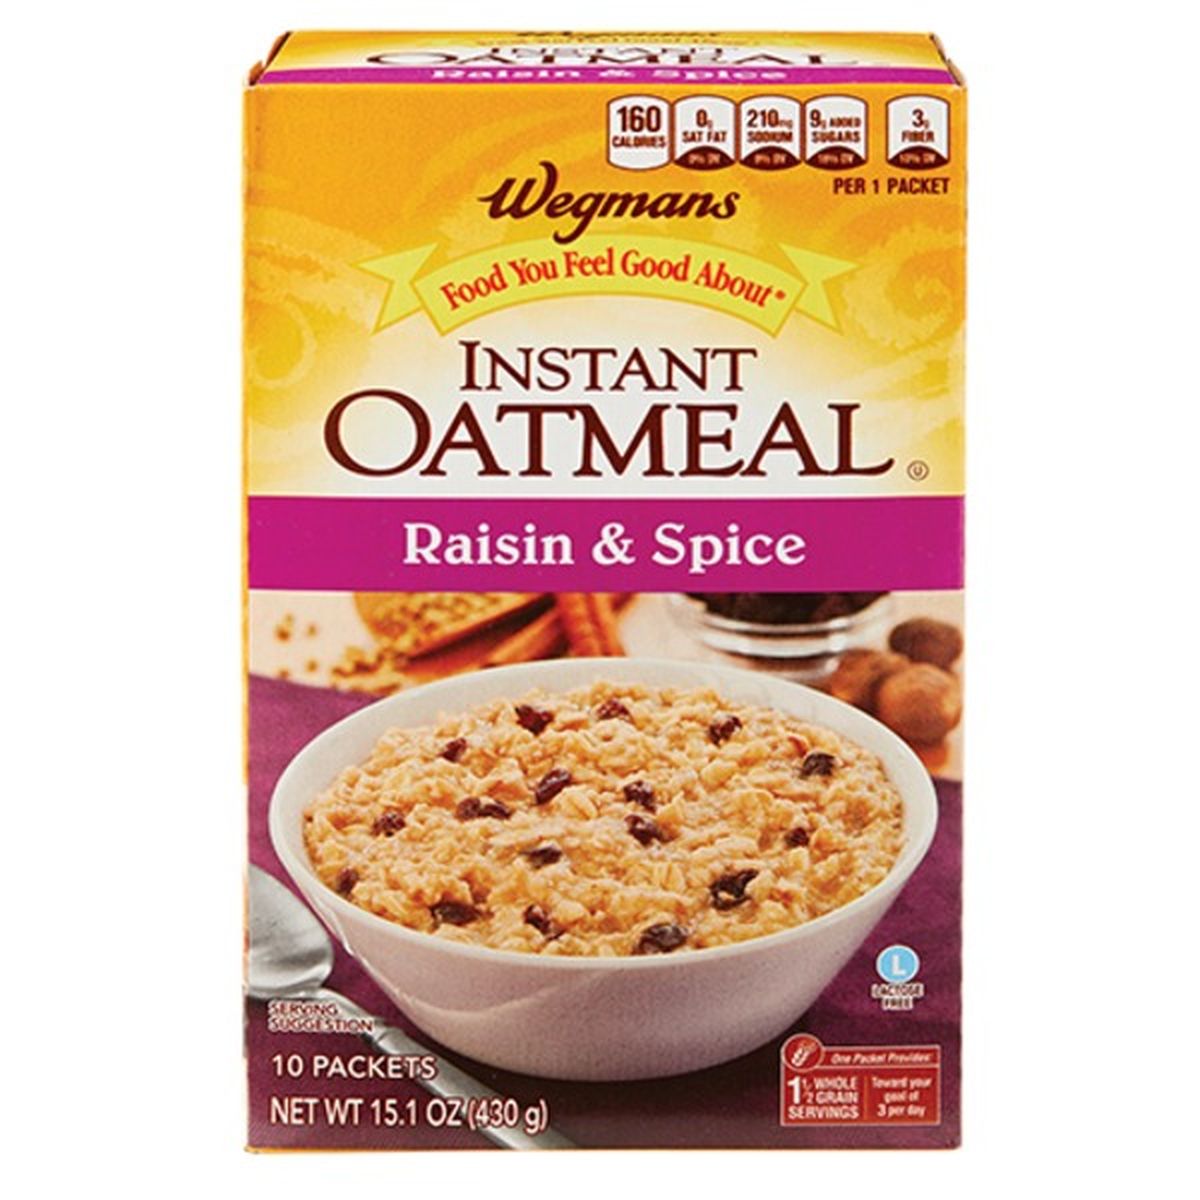 Calories in Wegmans Instant Oatmeal, Raisin & Spice